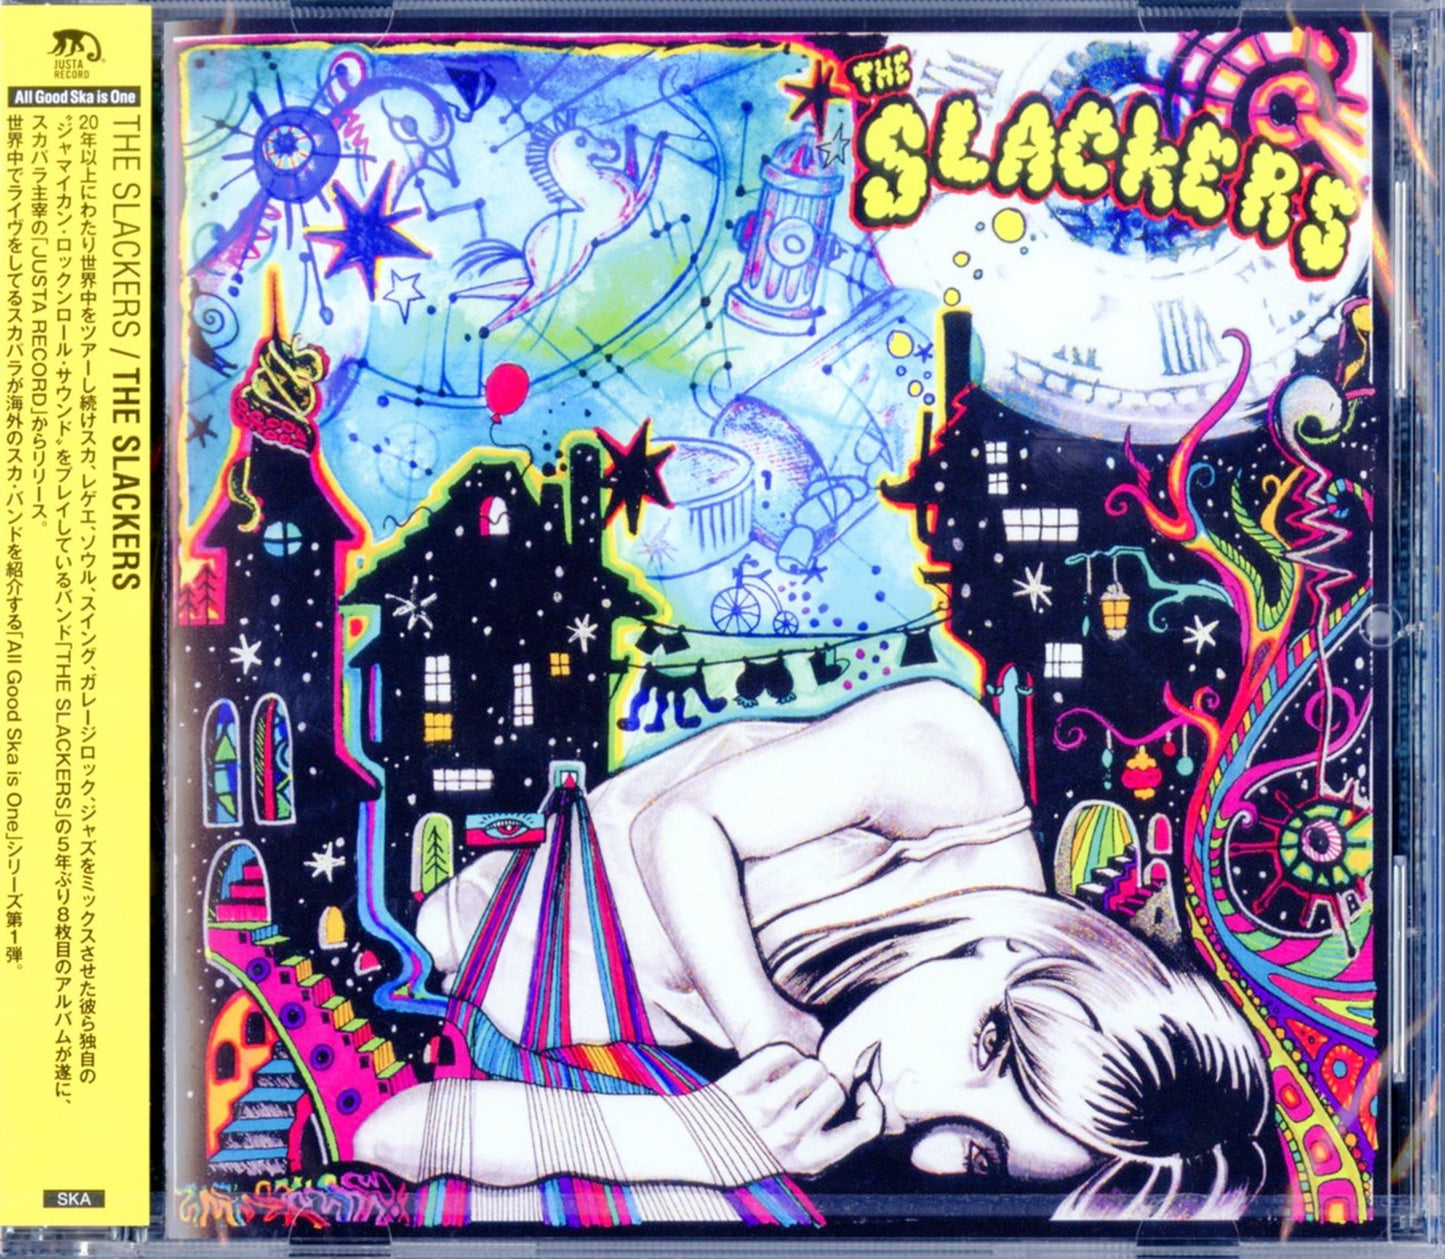 Slackers - The Slackers - Japan CD